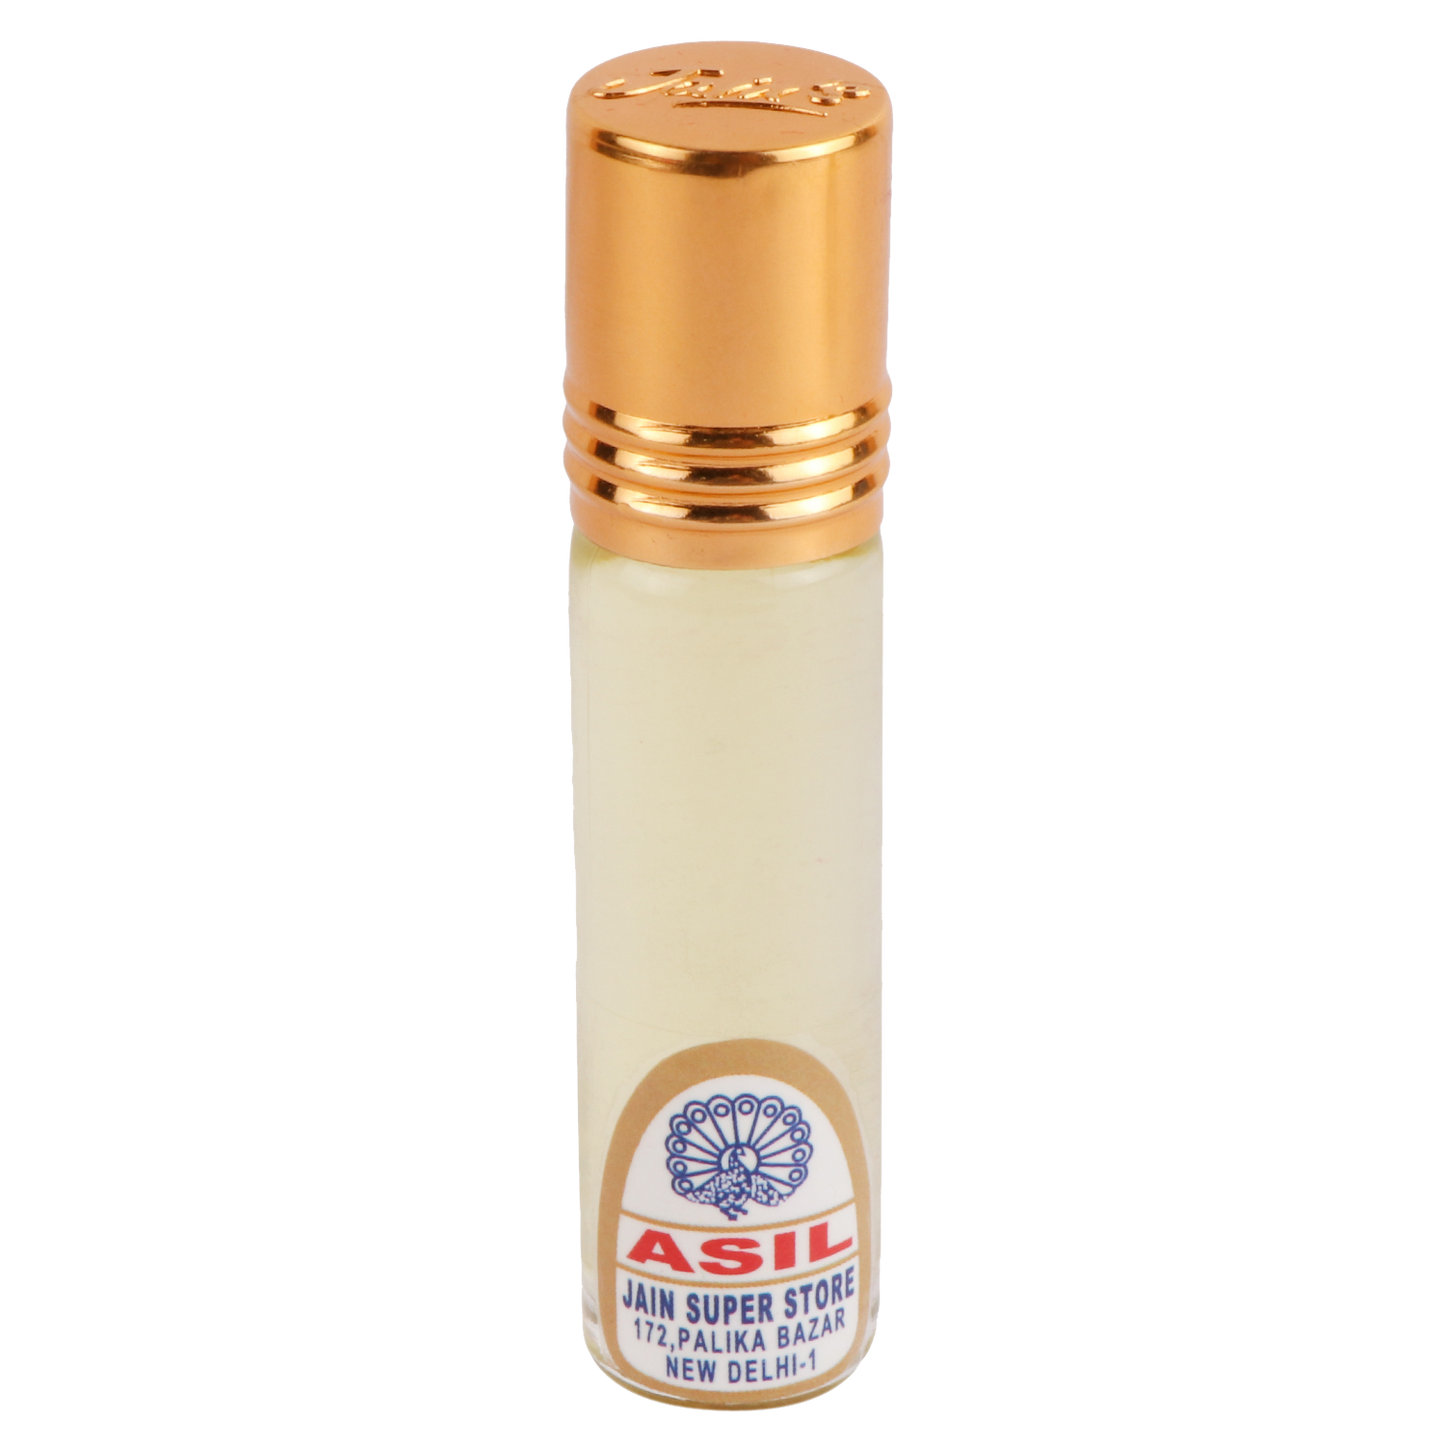 Asil Attar Perfume